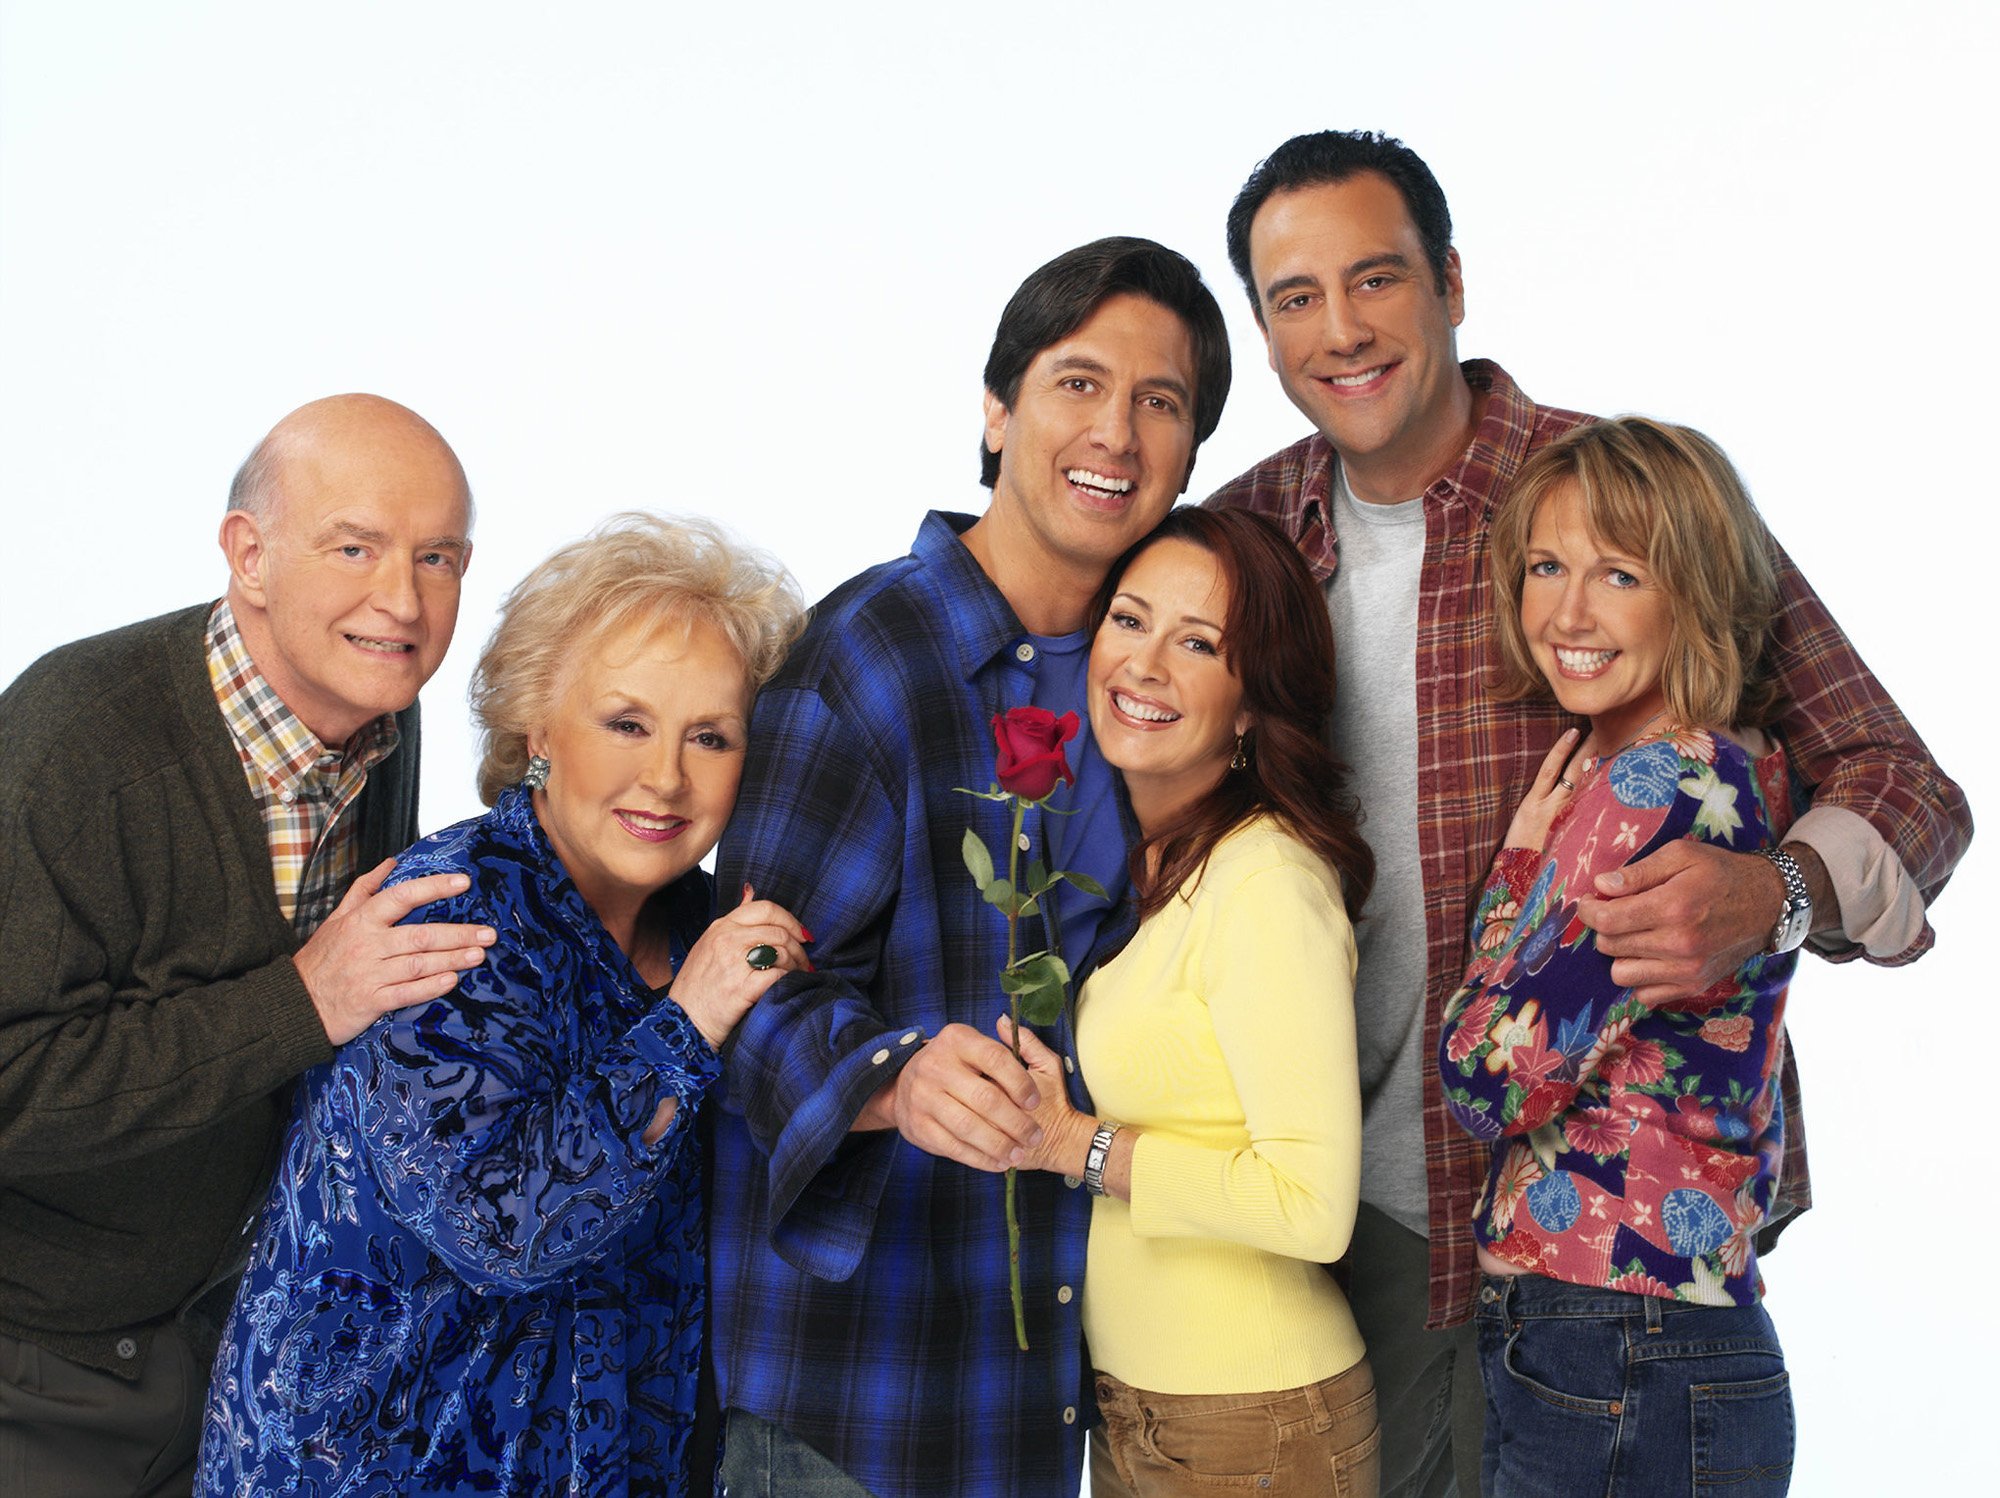 Cast of 'Everybody Loves Raymond': (L-R) Peter Boyle, Doris Roberts, Ray Romano, Patricia Heaton, Brad Garrett, and Monica Horan